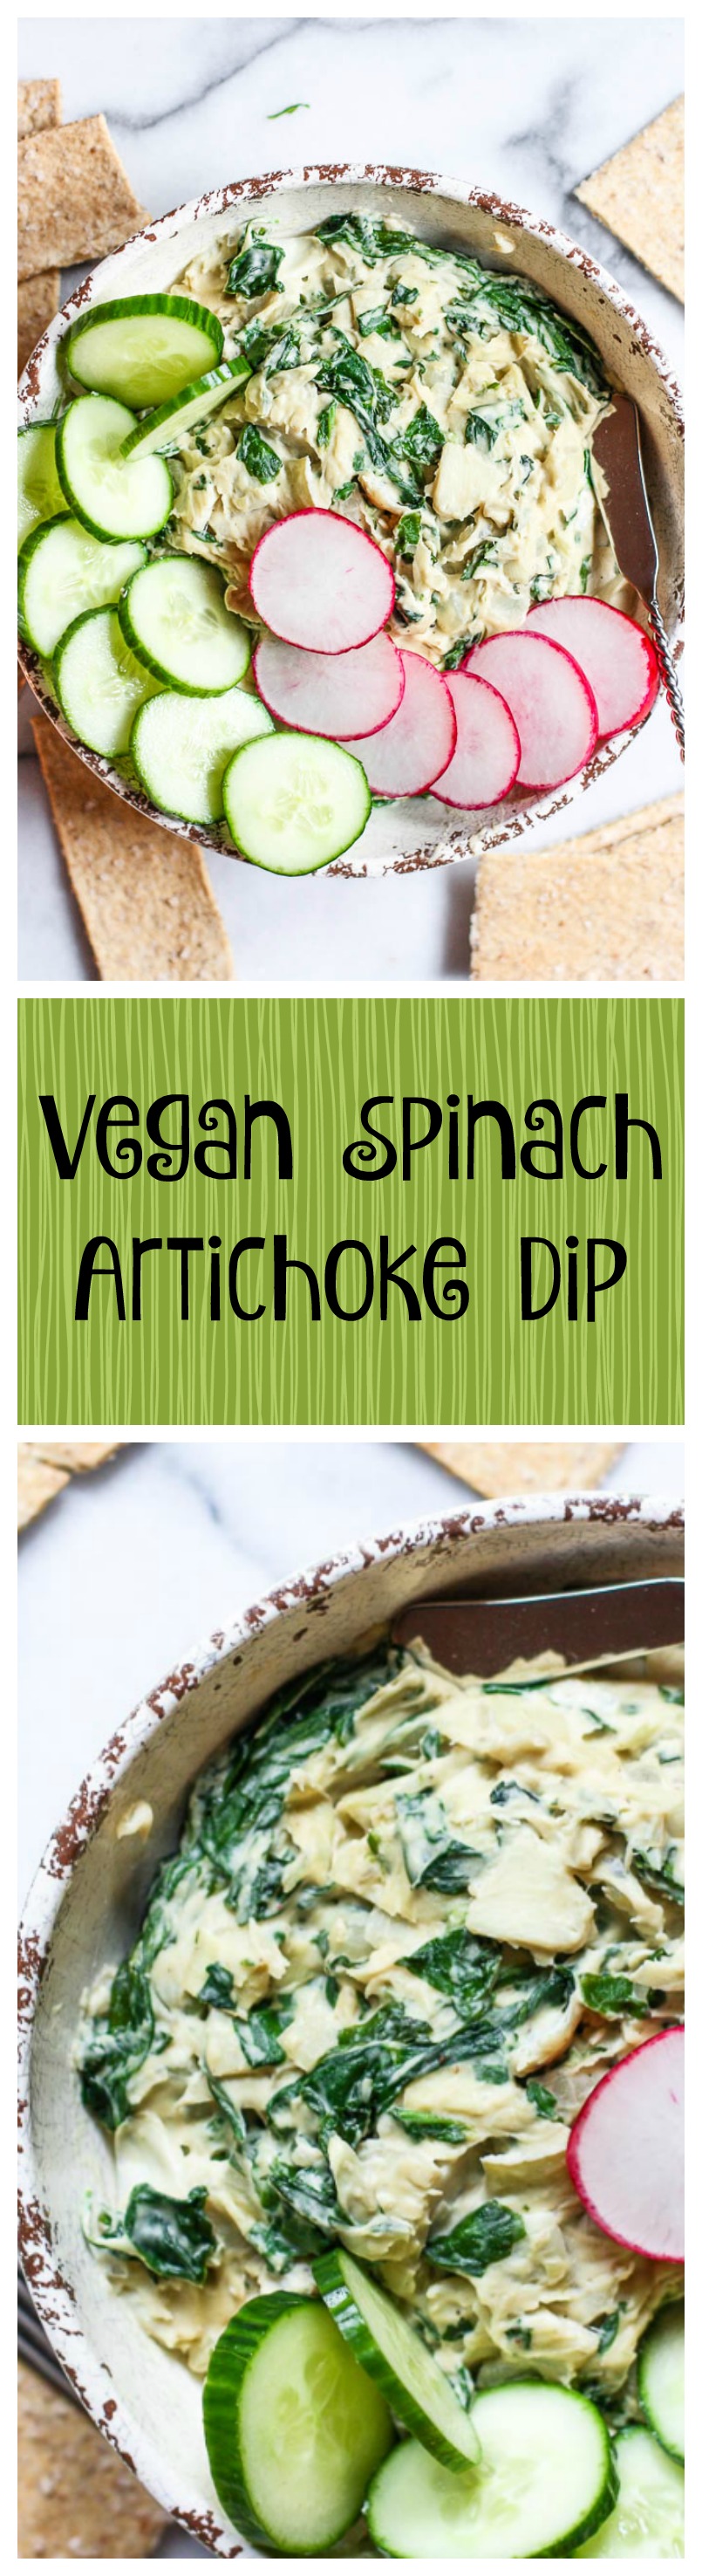 vegan spinach artichoke dip